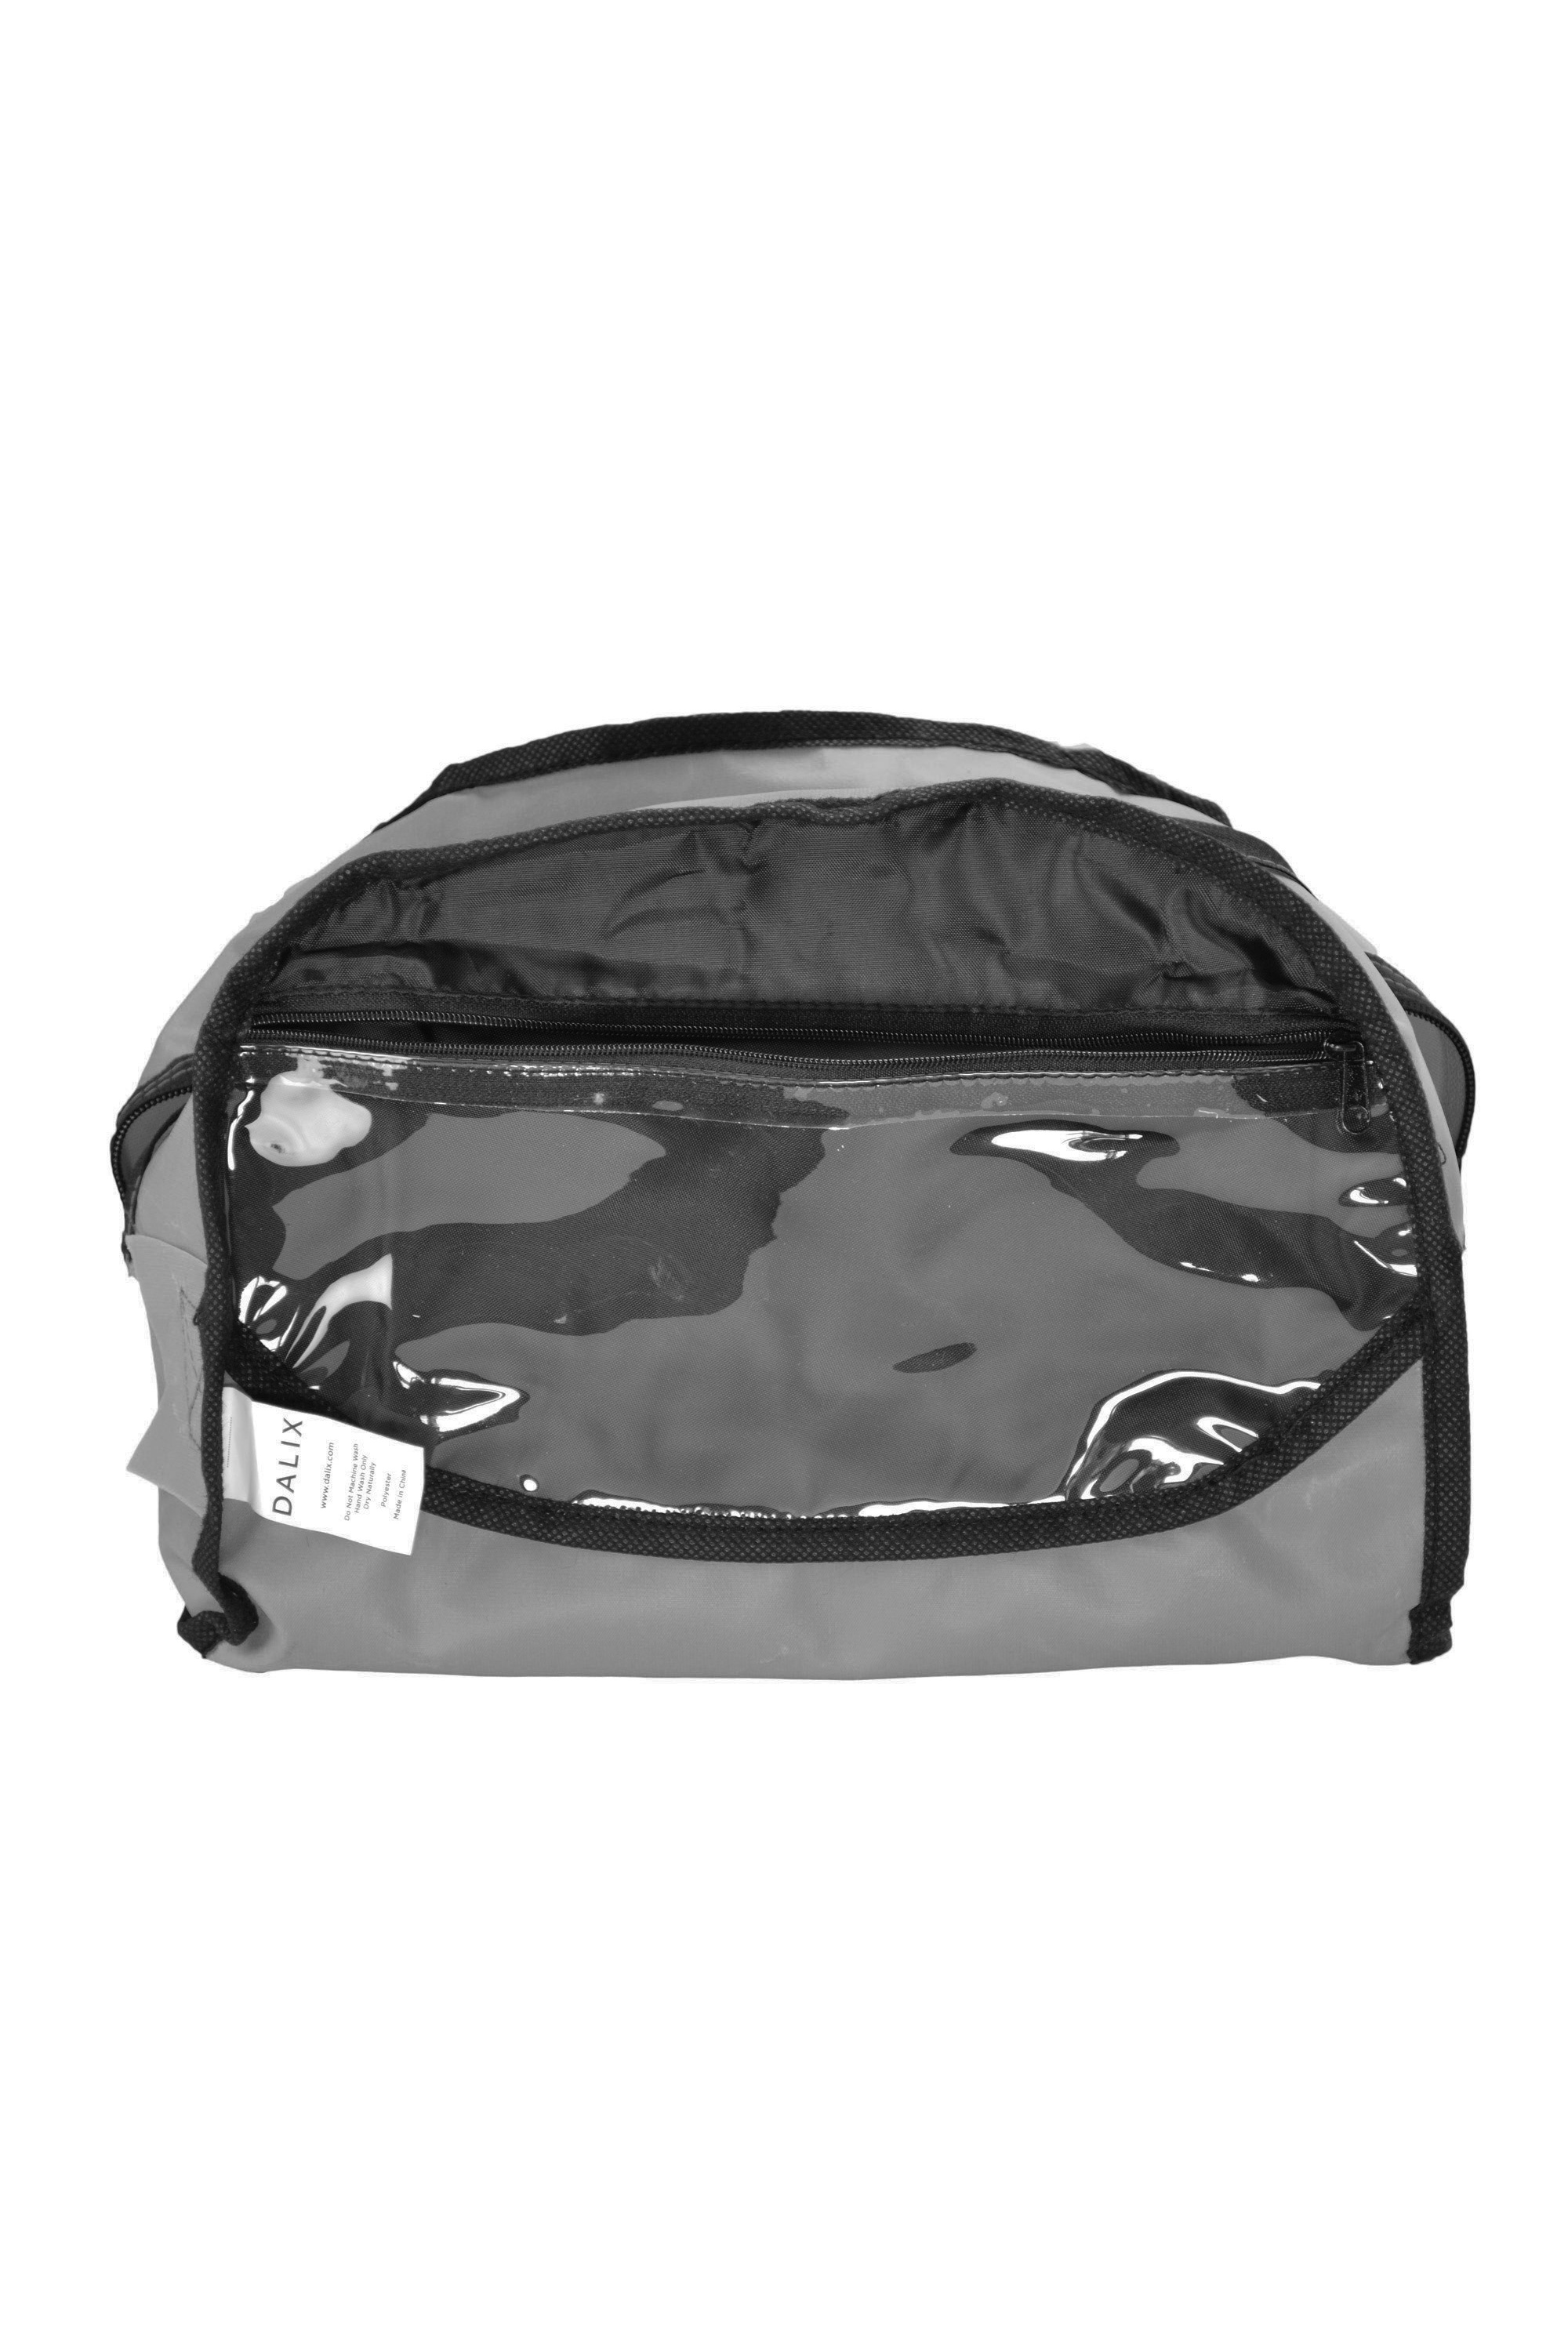 DALIX 12" Mini Duffel Bag Gym Duffle in Gray - image 5 of 8